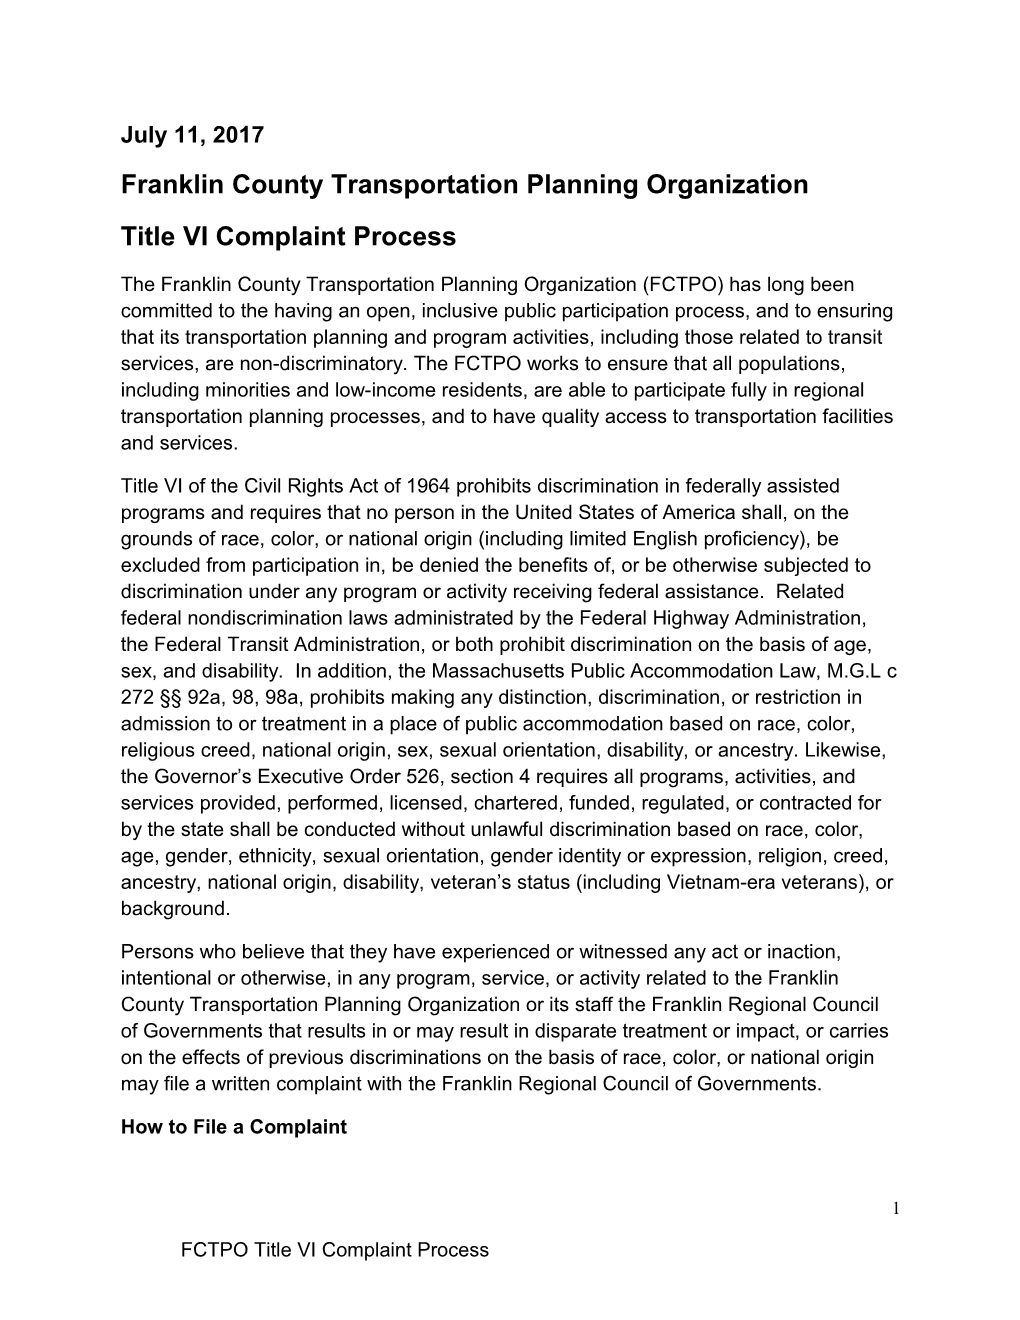 Franklincounty Transportation Planning Organization